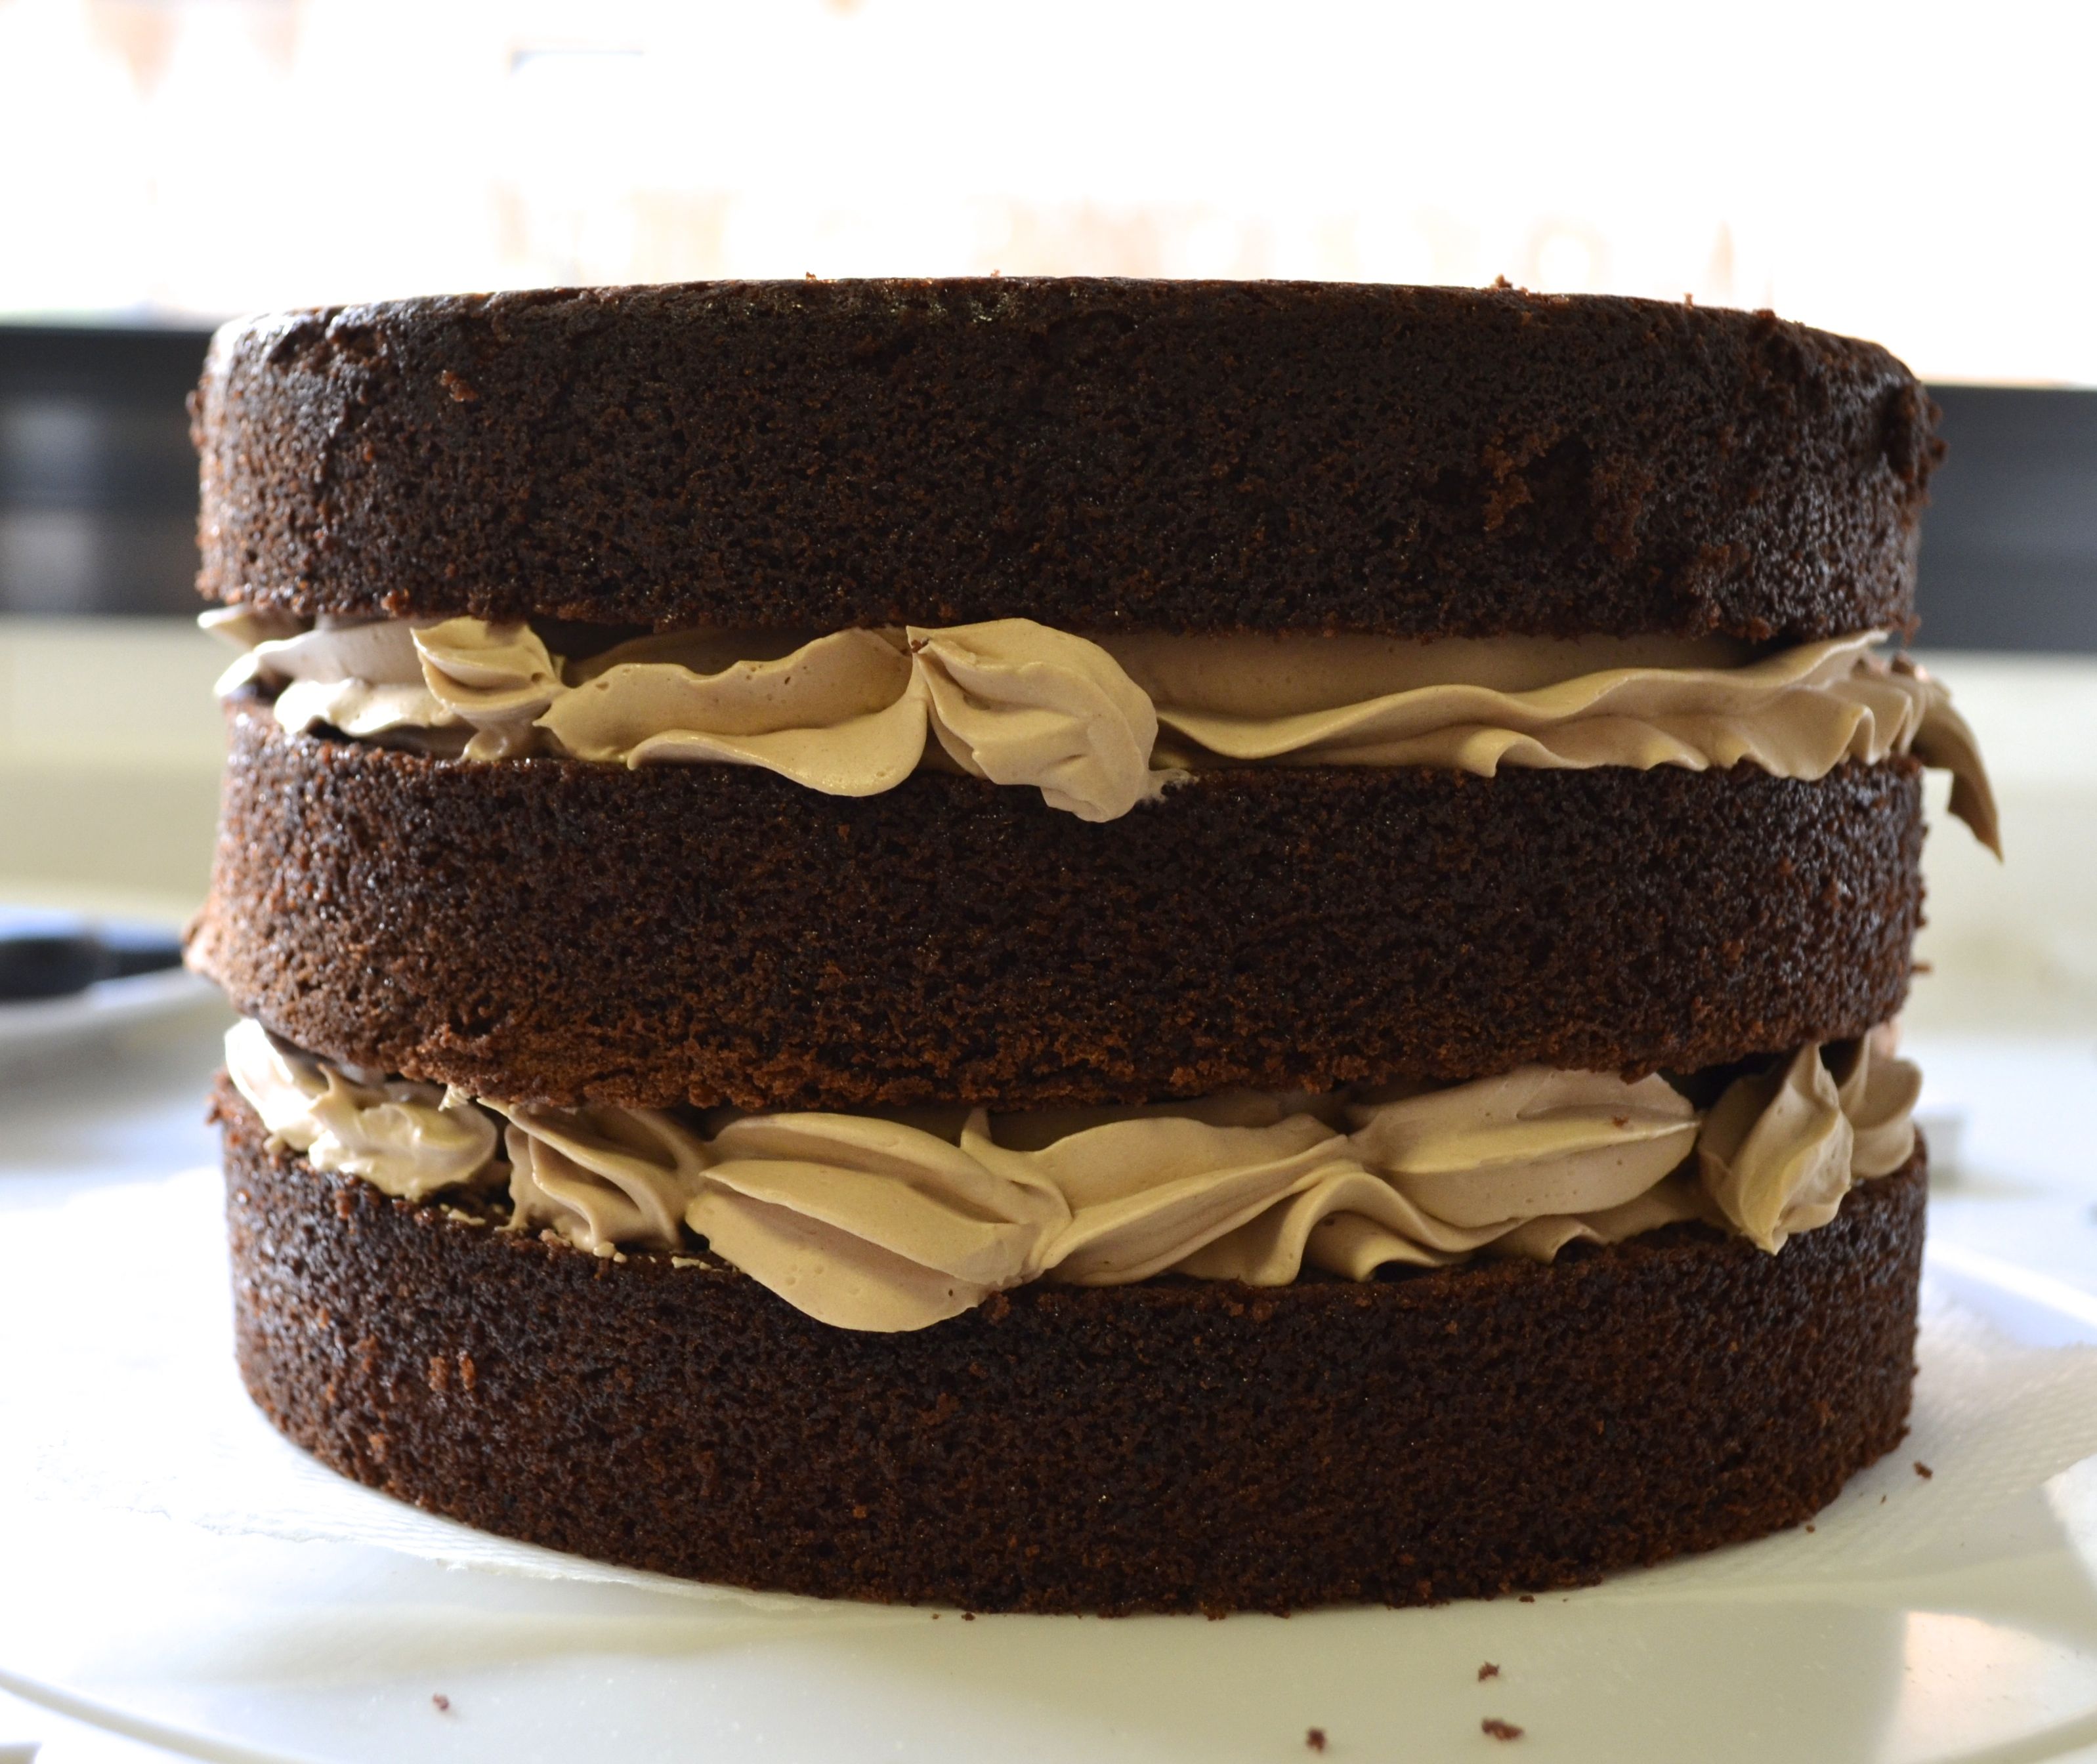 Chocolate cake layers